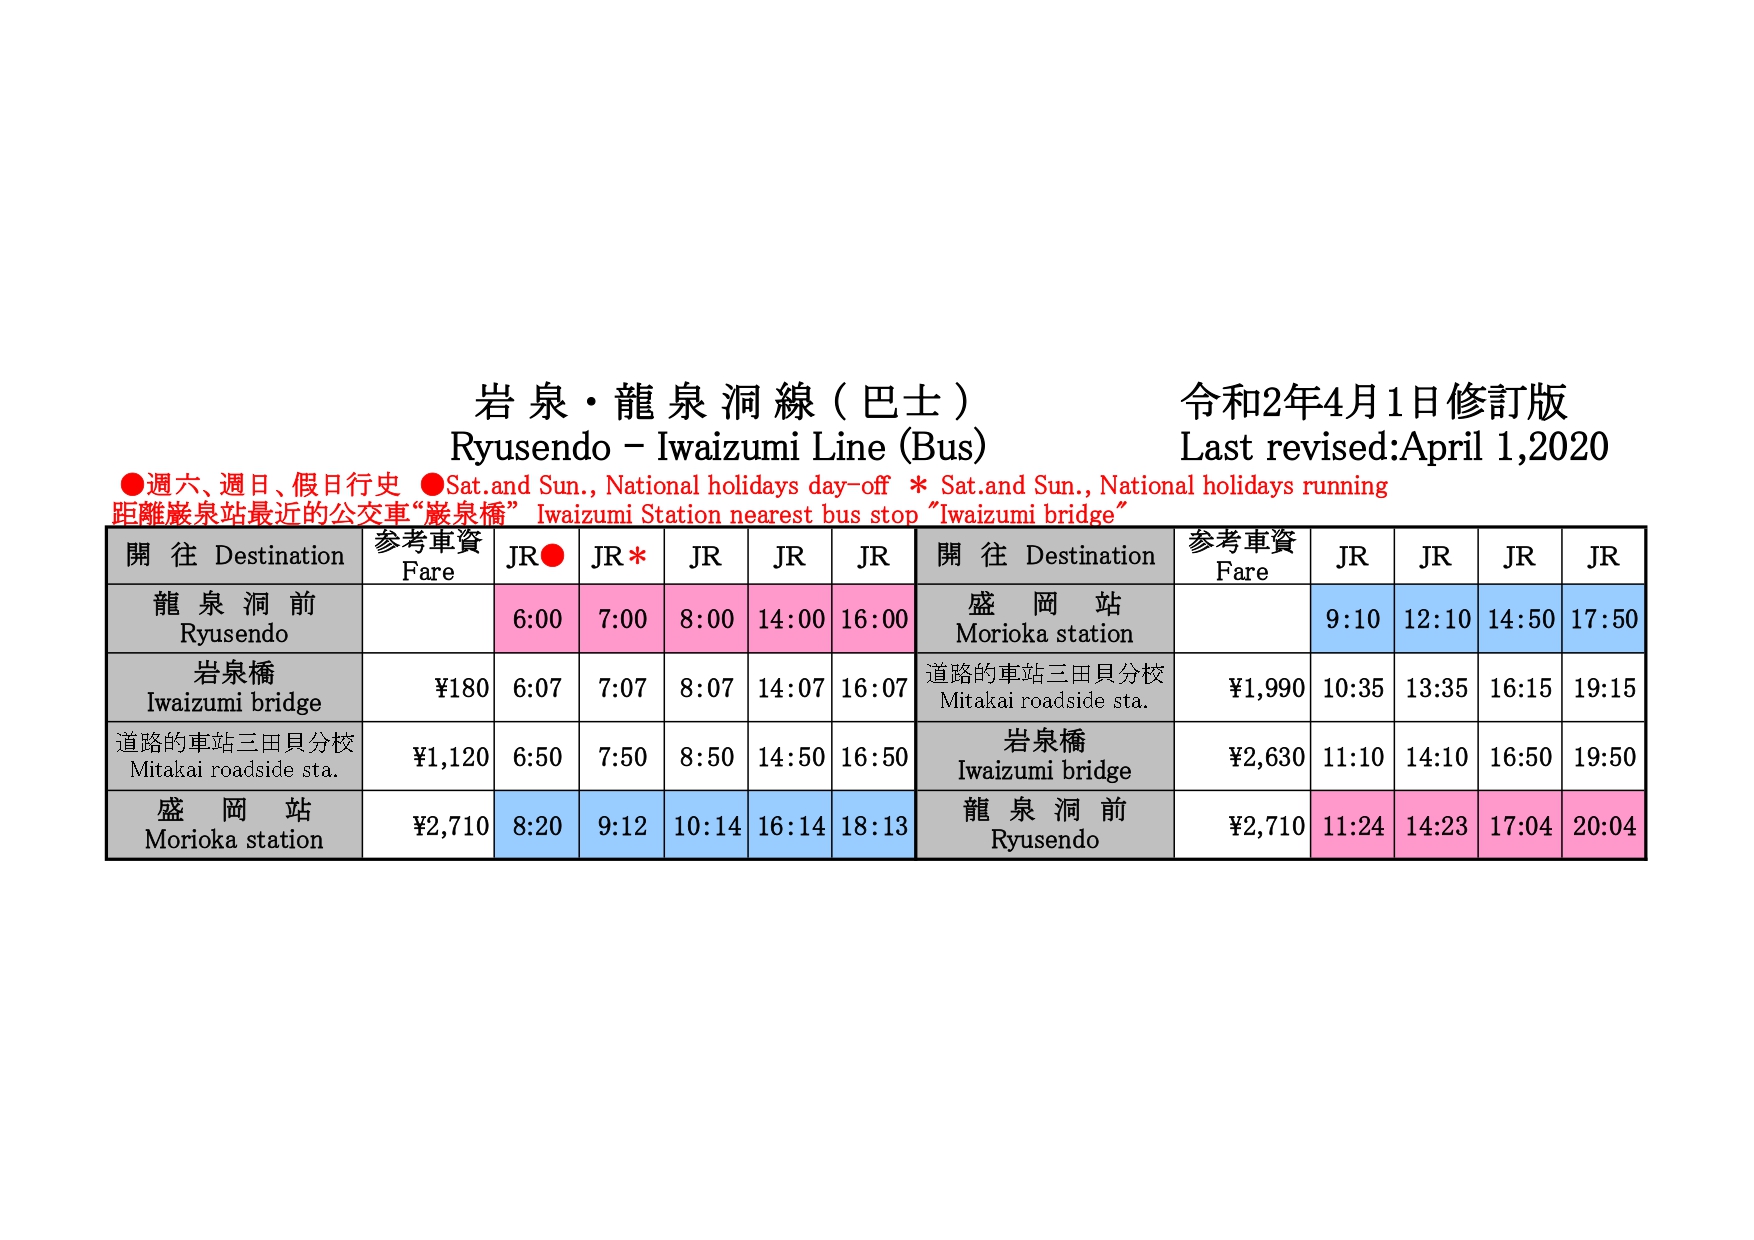 Timetable(Last revised:April 1, 2020)